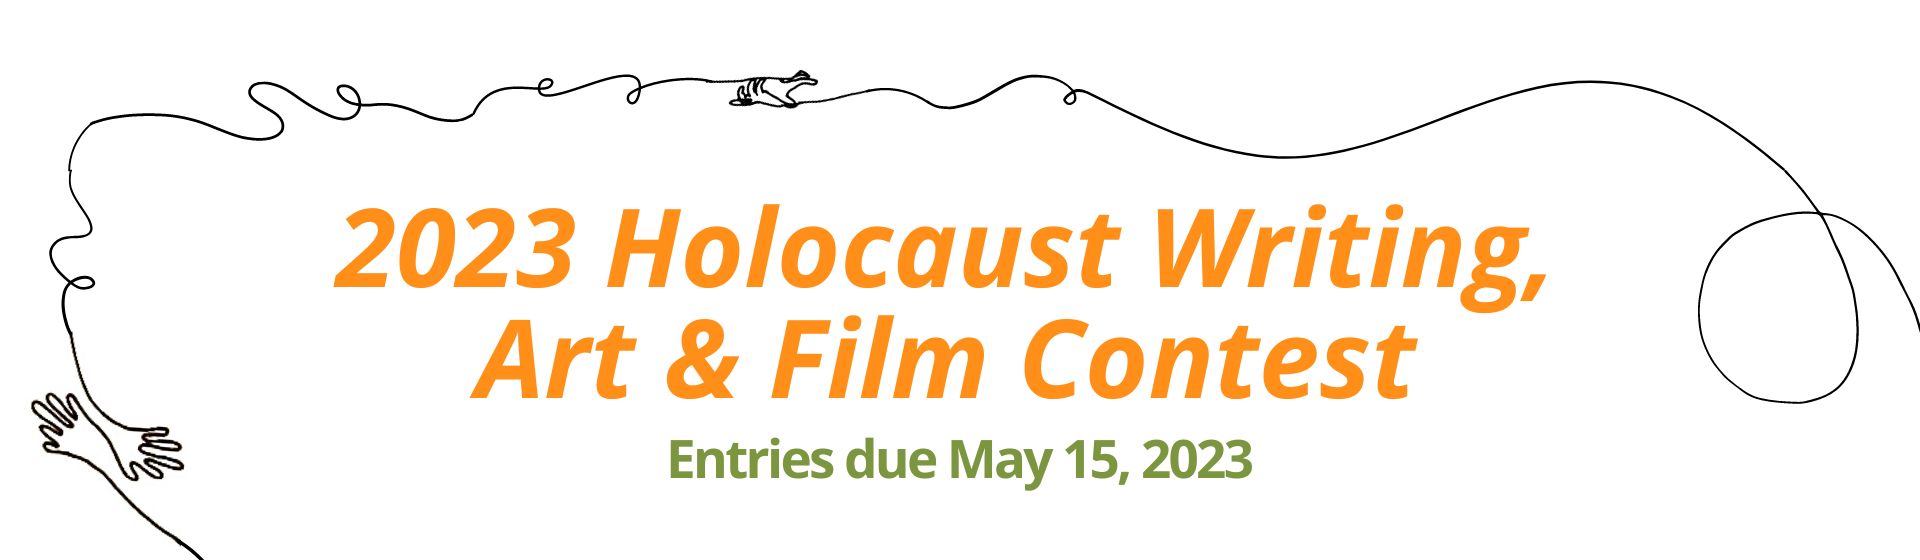 Writing, Art & Film Contest